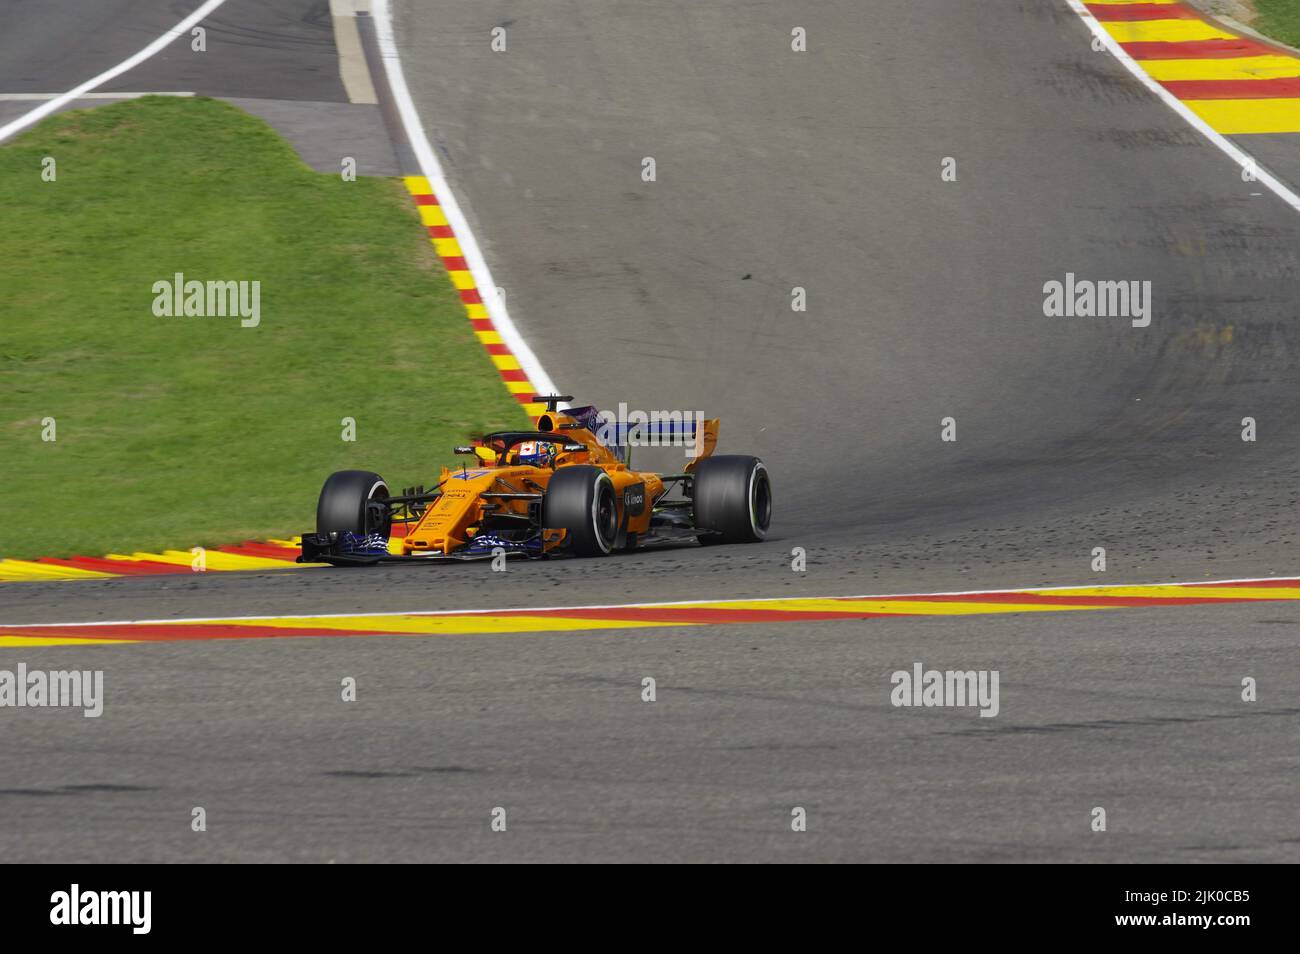 Lando Norris - Debut - Mclaren F1 - Formula 1 Belgian Grand Prix 2018 Stock Photo